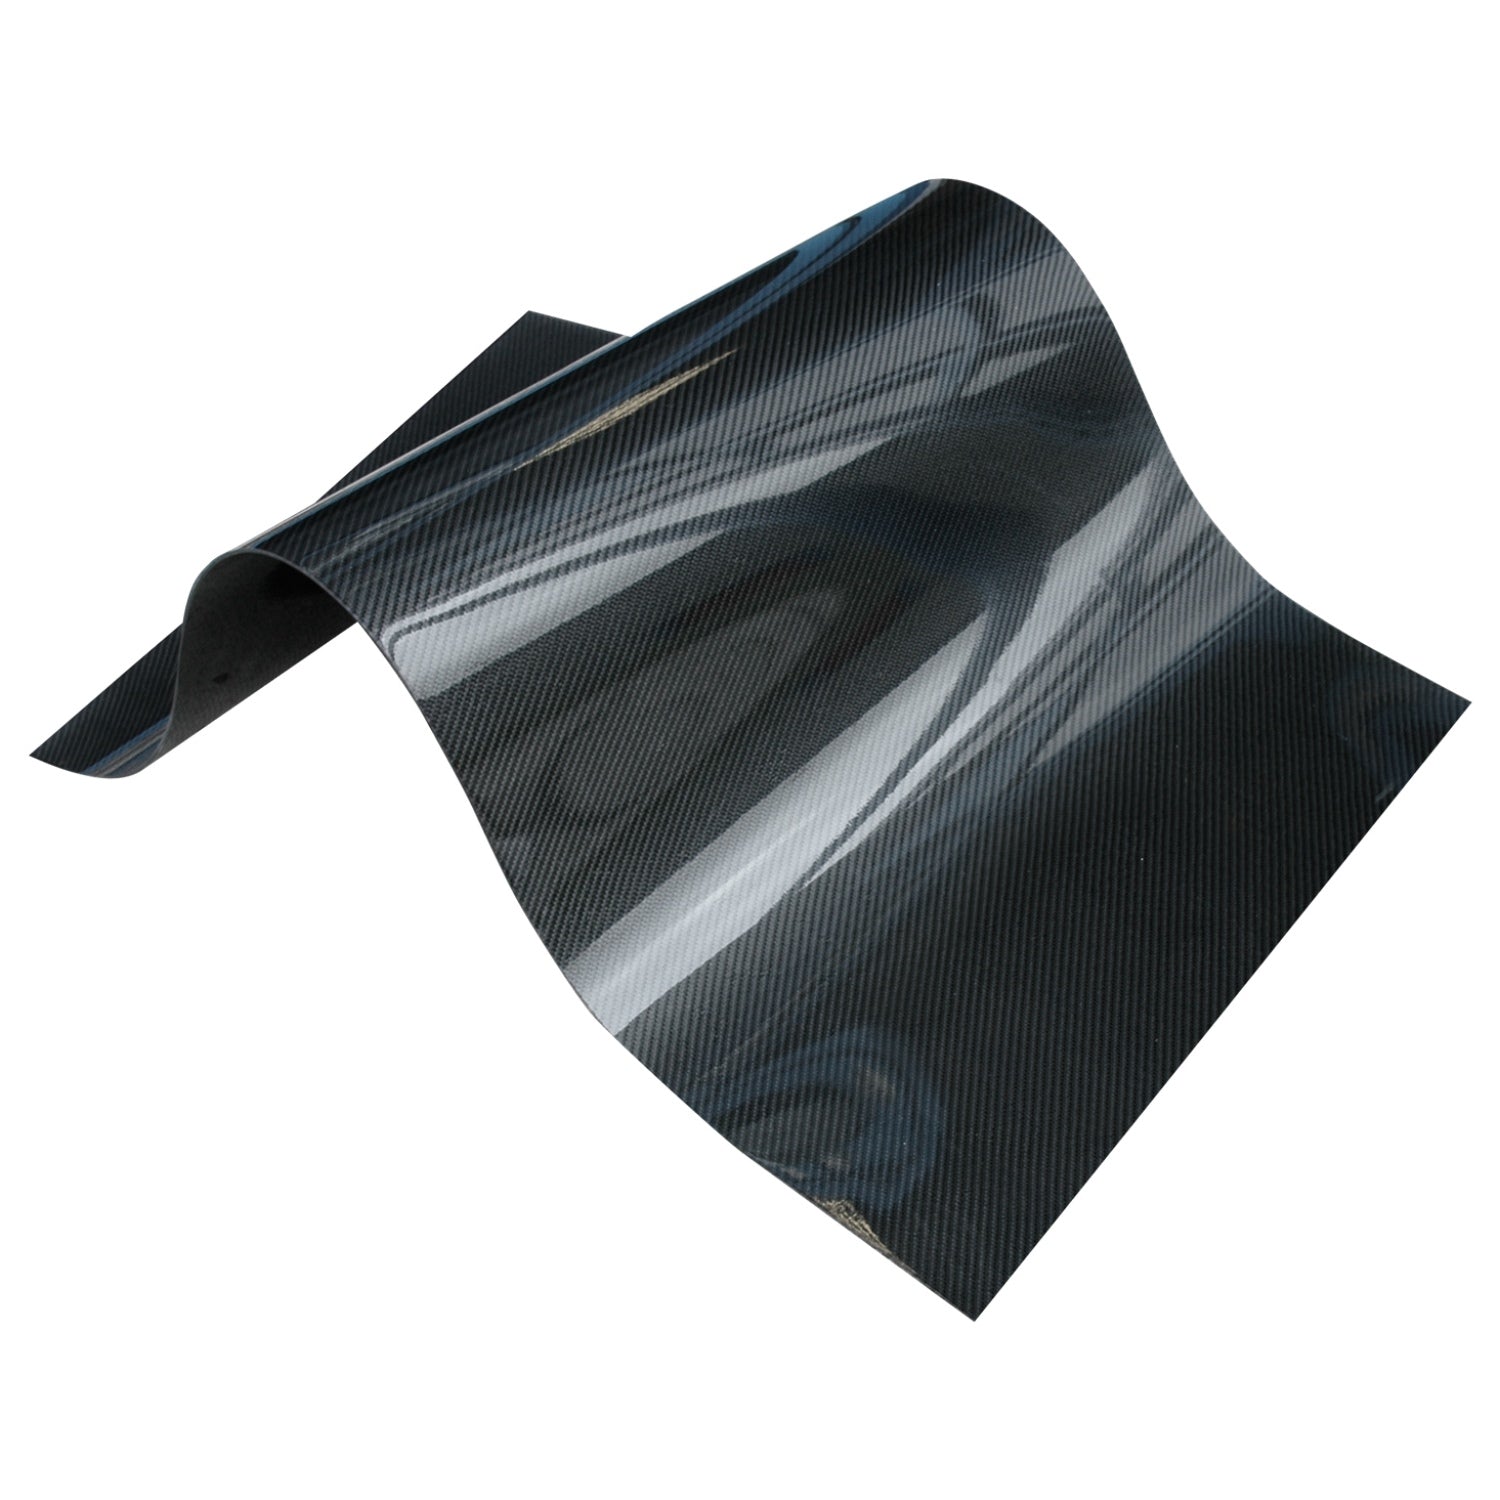 Extra Thick Flexible Carbon Fibre Sheet | Plastock